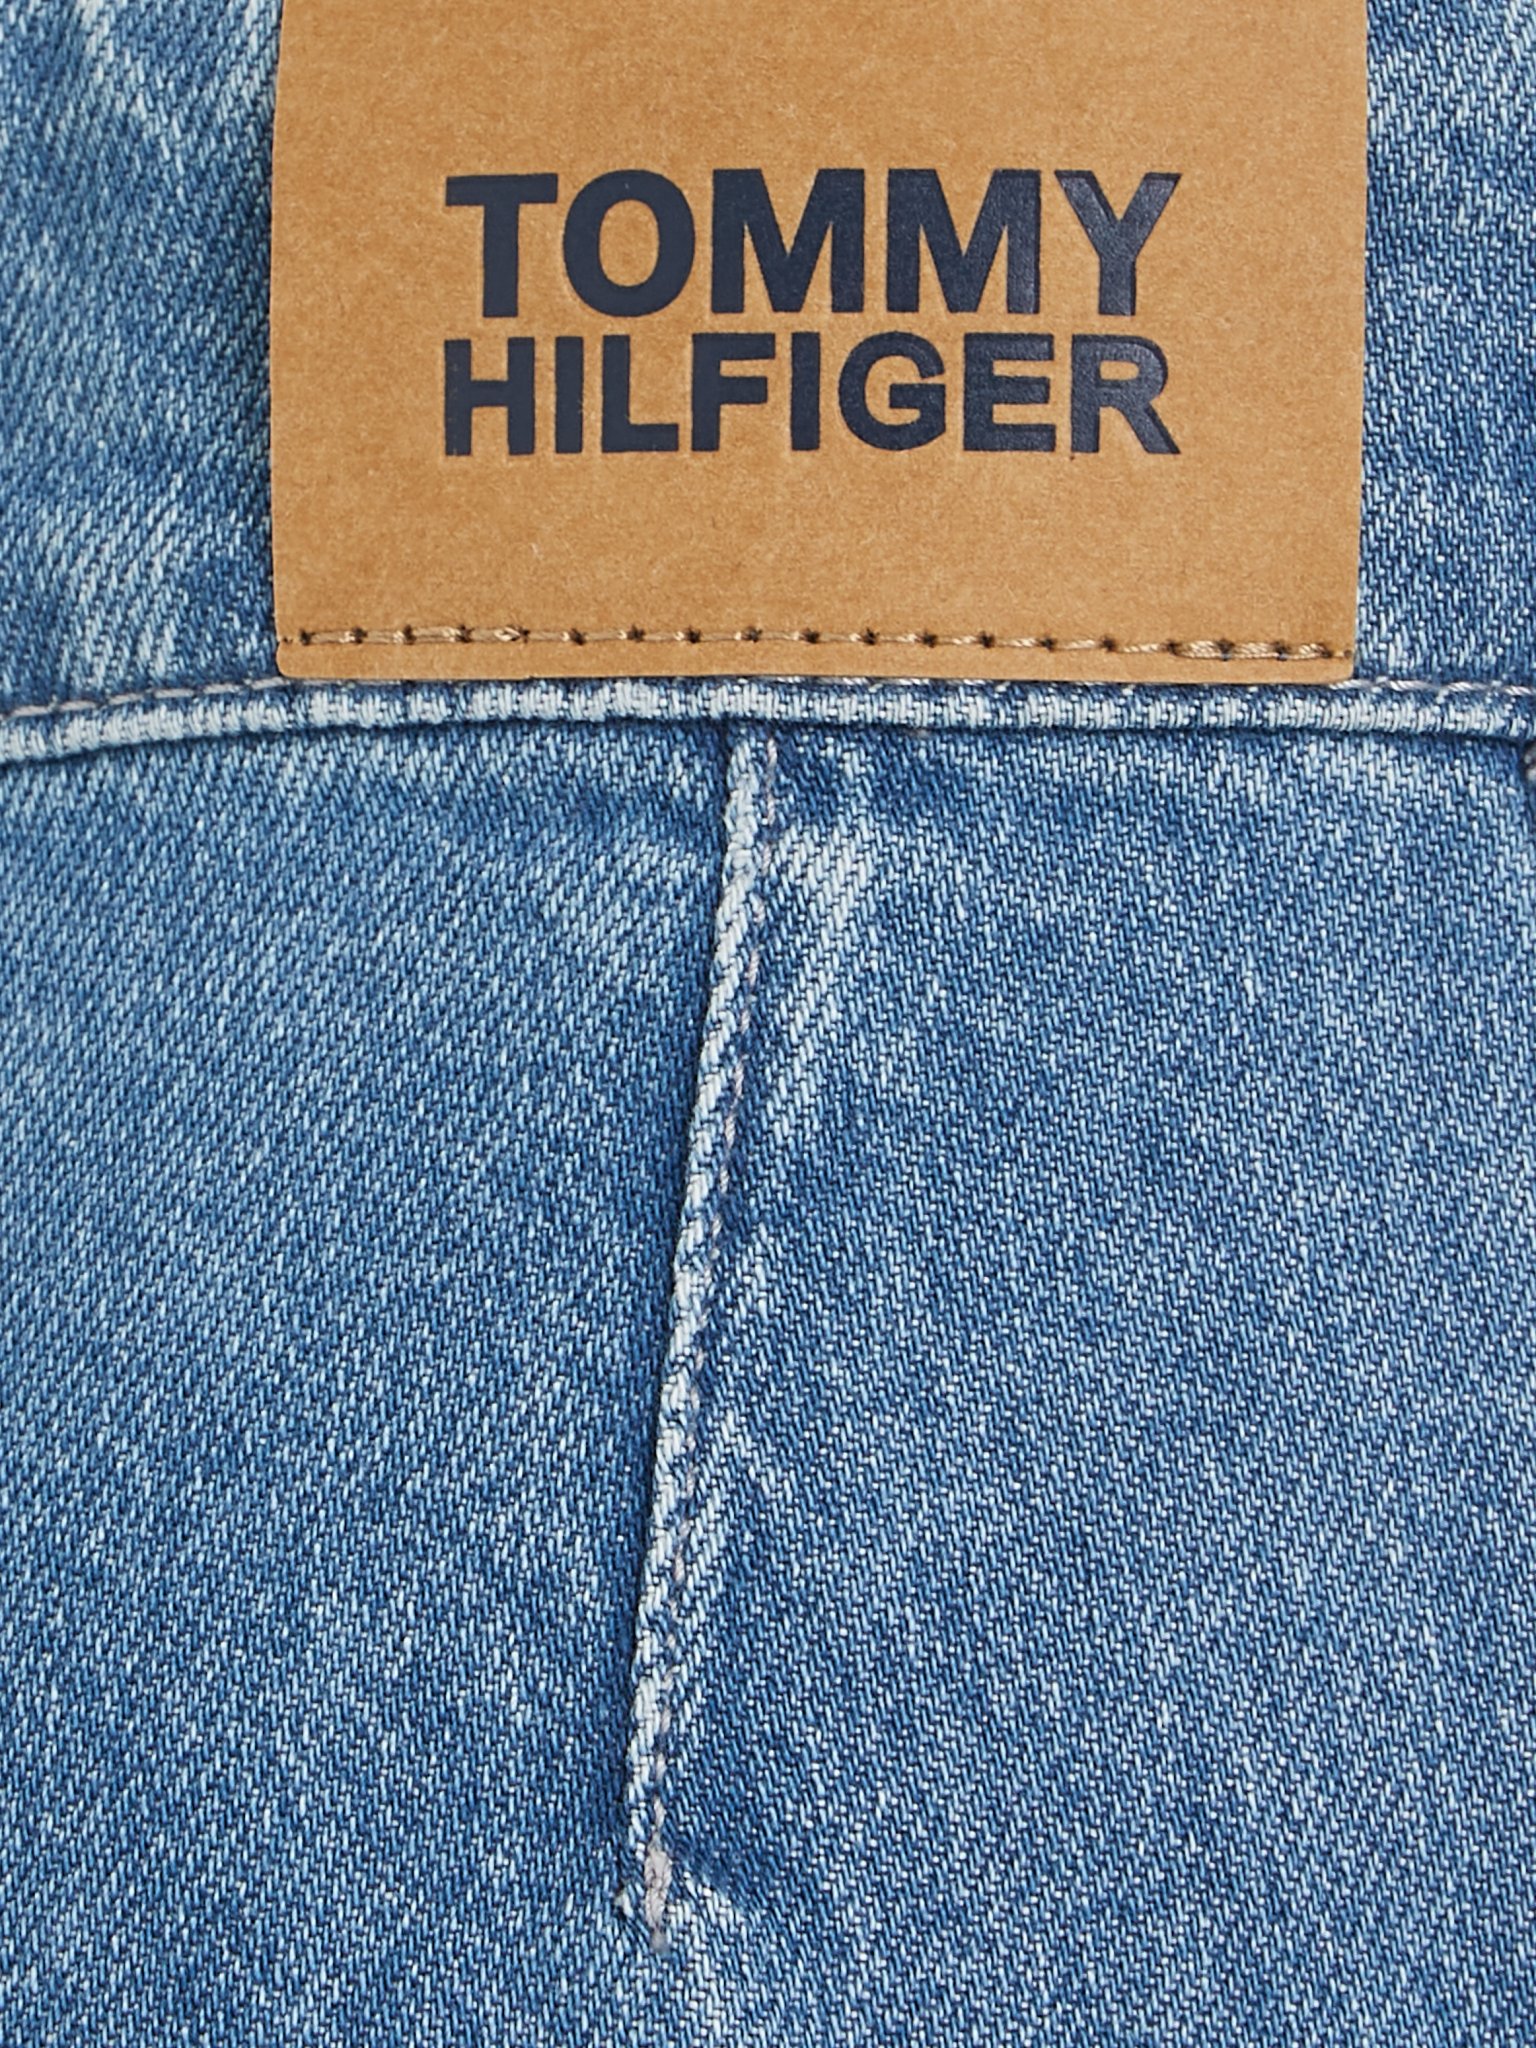 TOMMY HILFIGER Jeans 10704864